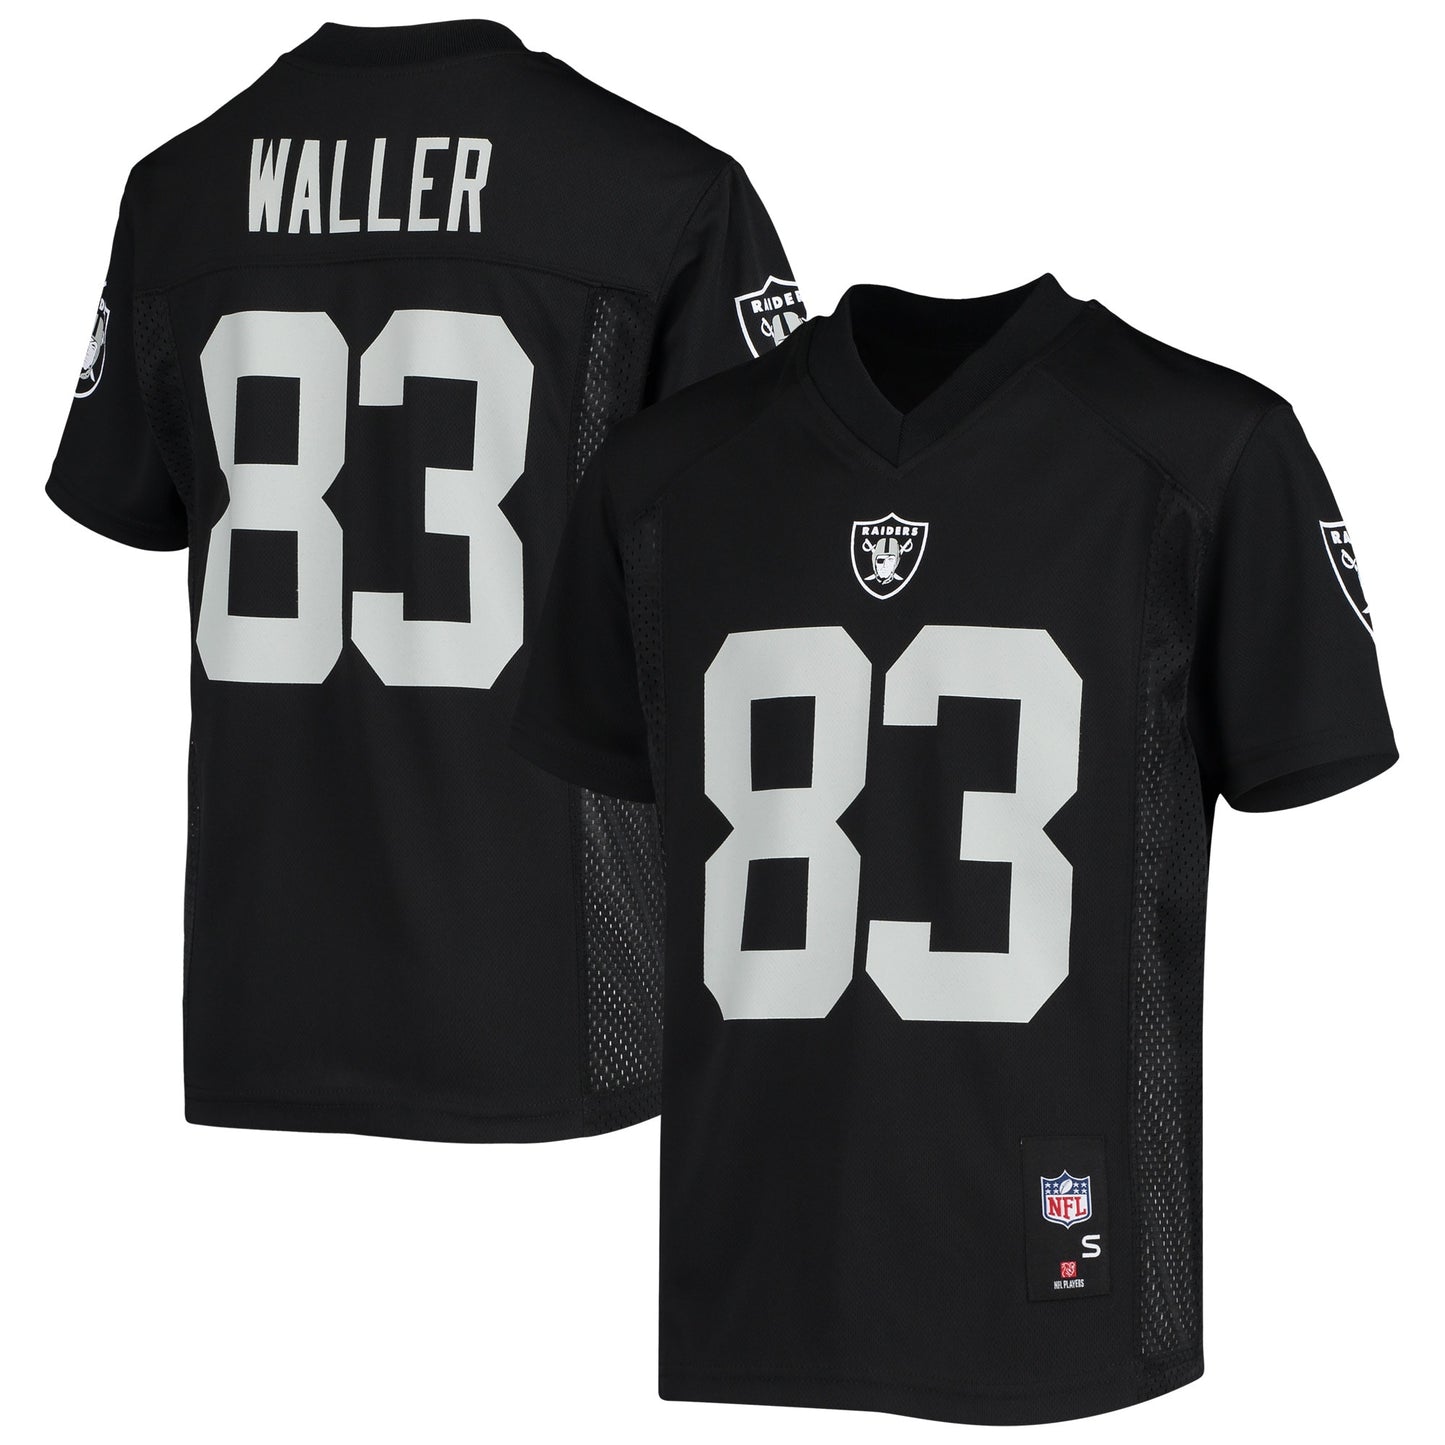 Darren Waller Las Vegas Raiders Youth Replica Player Jersey - Black